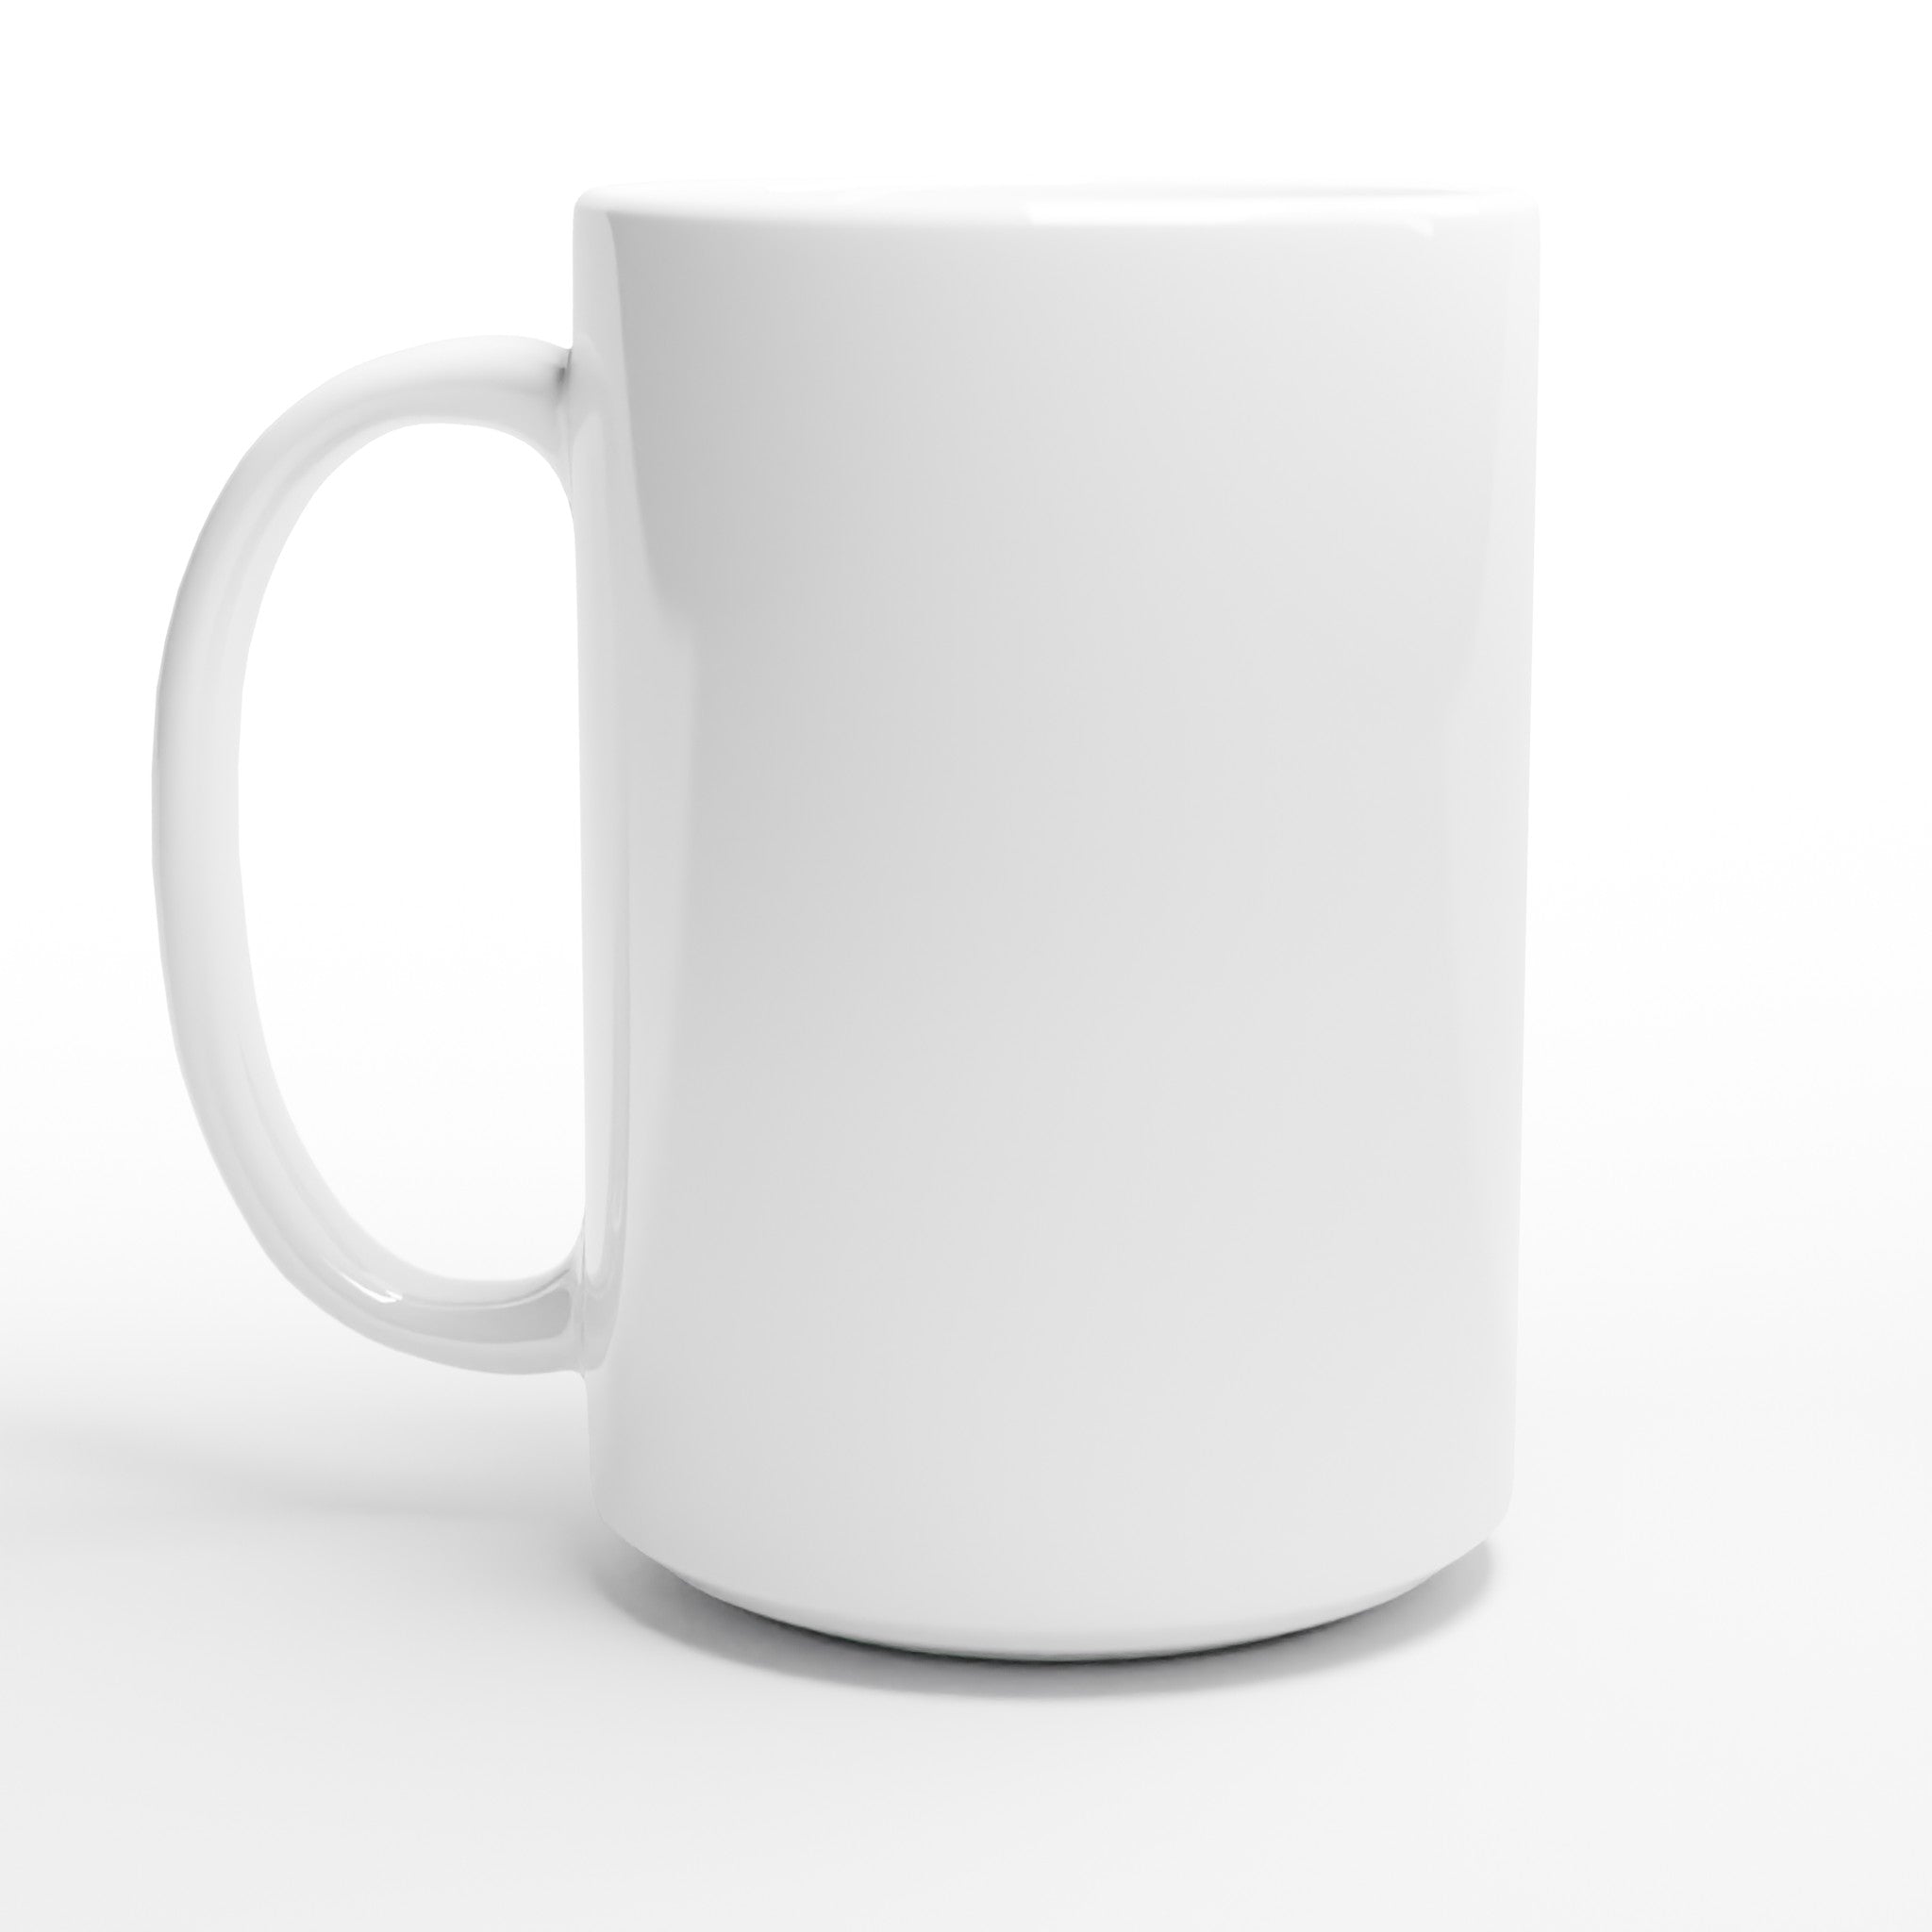 Personalized White 15oz Ceramic Mug - Optimalprint